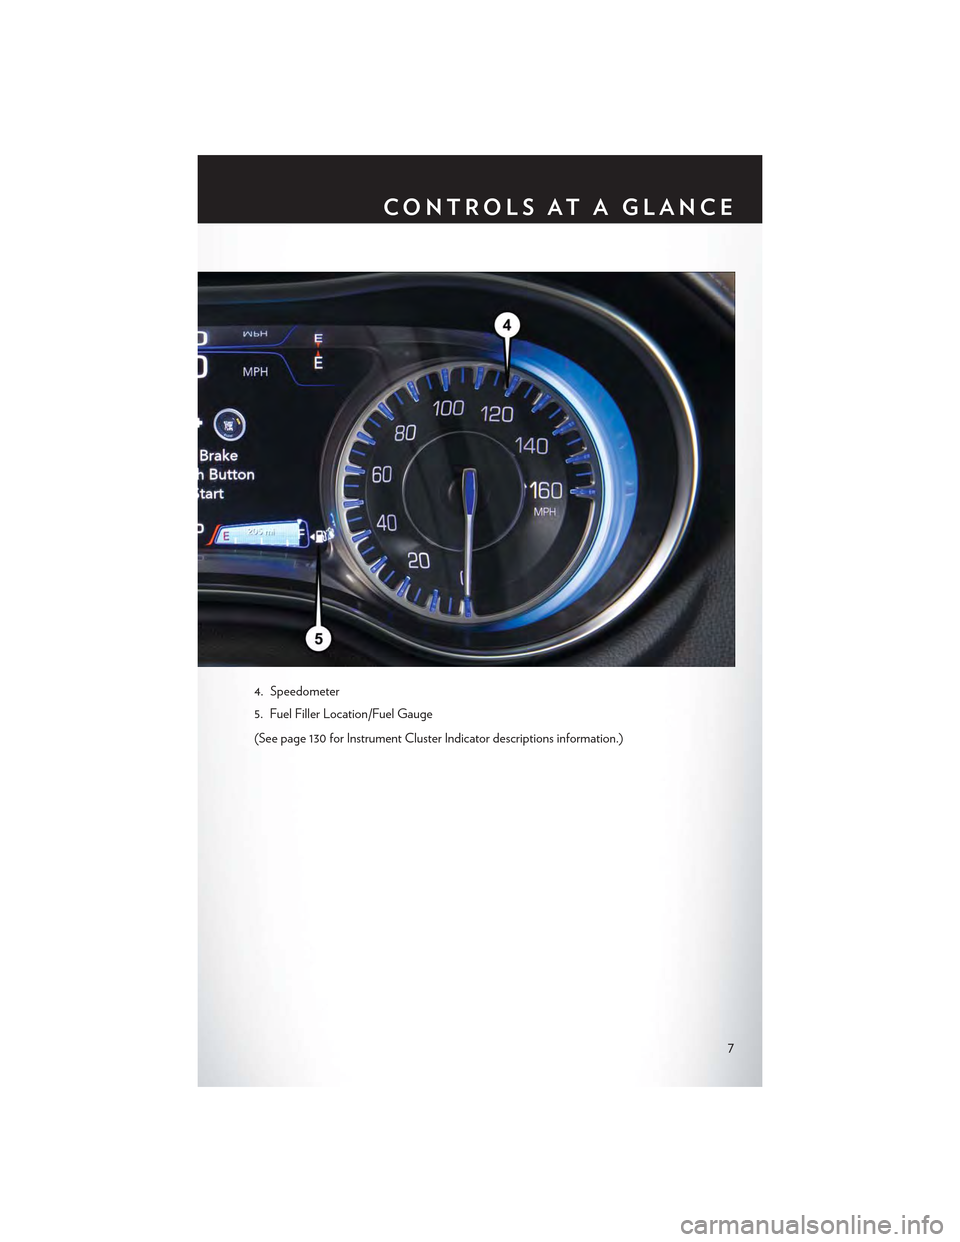 CHRYSLER 300 2015 2.G User Guide 4. Speedometer
5. Fuel Filler Location/Fuel Gauge
(See page 130 for Instrument Cluster Indicator descriptions information.)
CONTROLS AT A GLANCE
7 